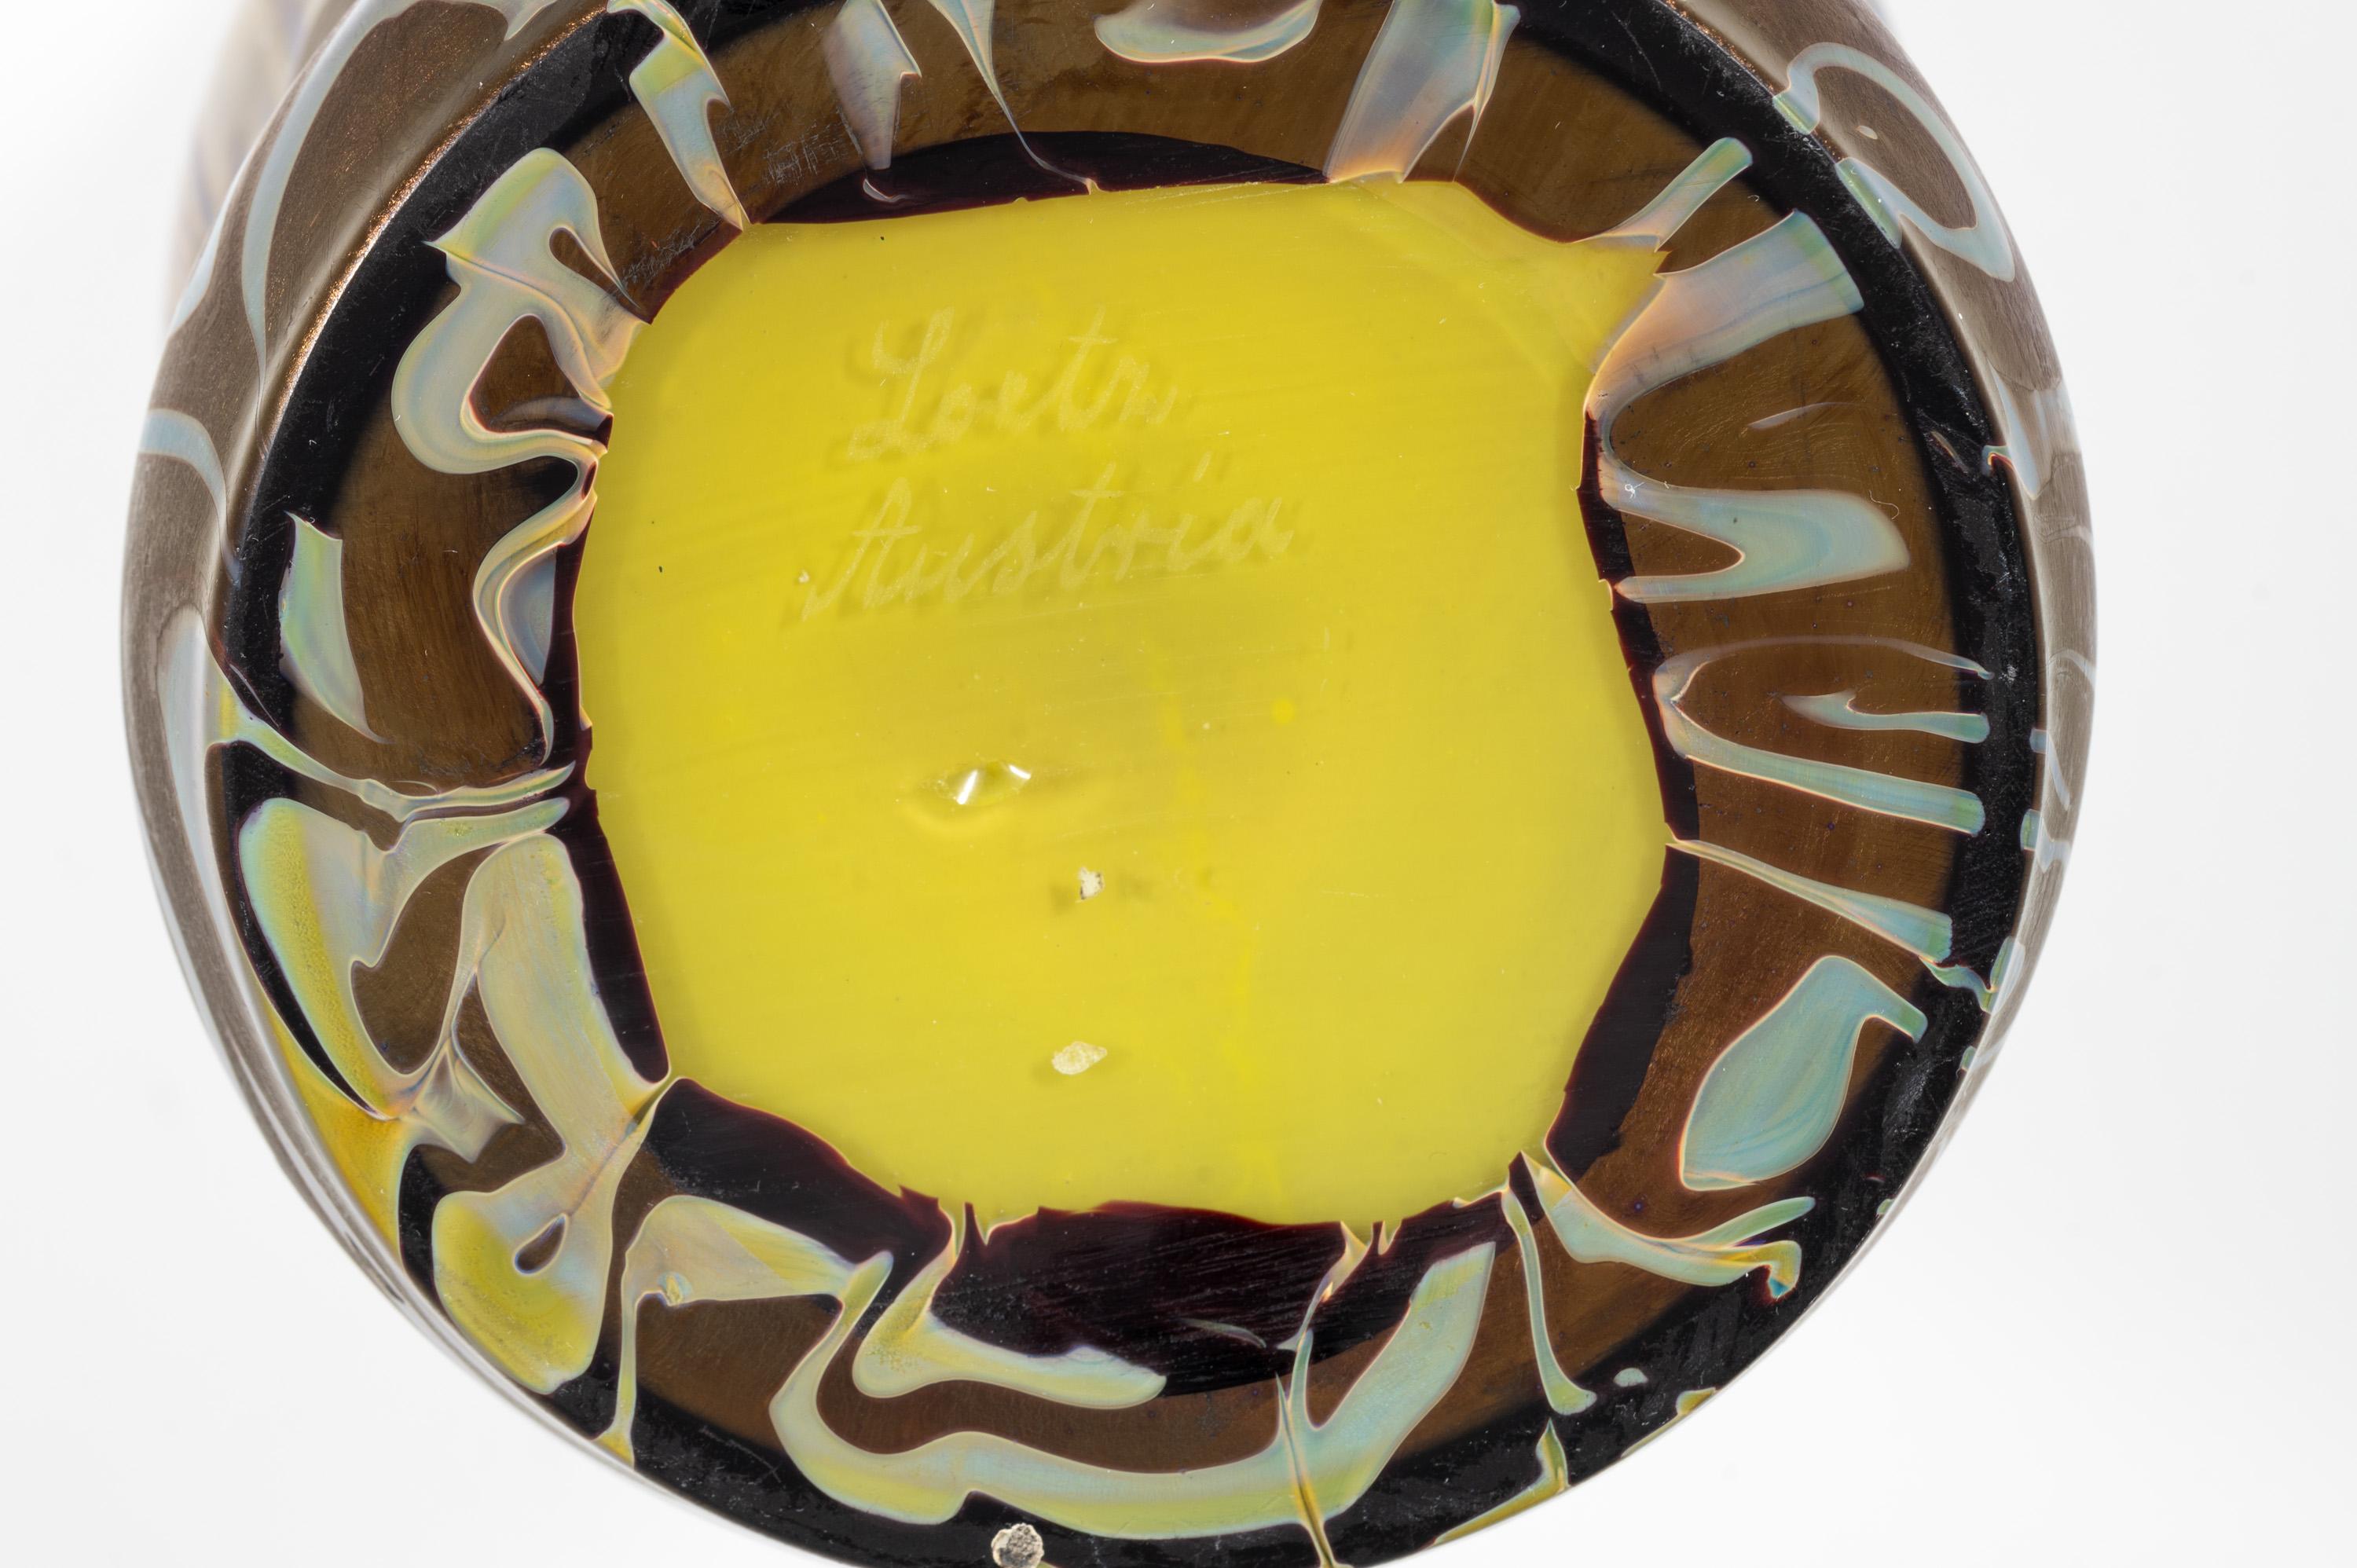 20th Century Bohemian Glass Vase Loetz circa 1900 Signed Art Nouveau Jugendstil Yellow Brown